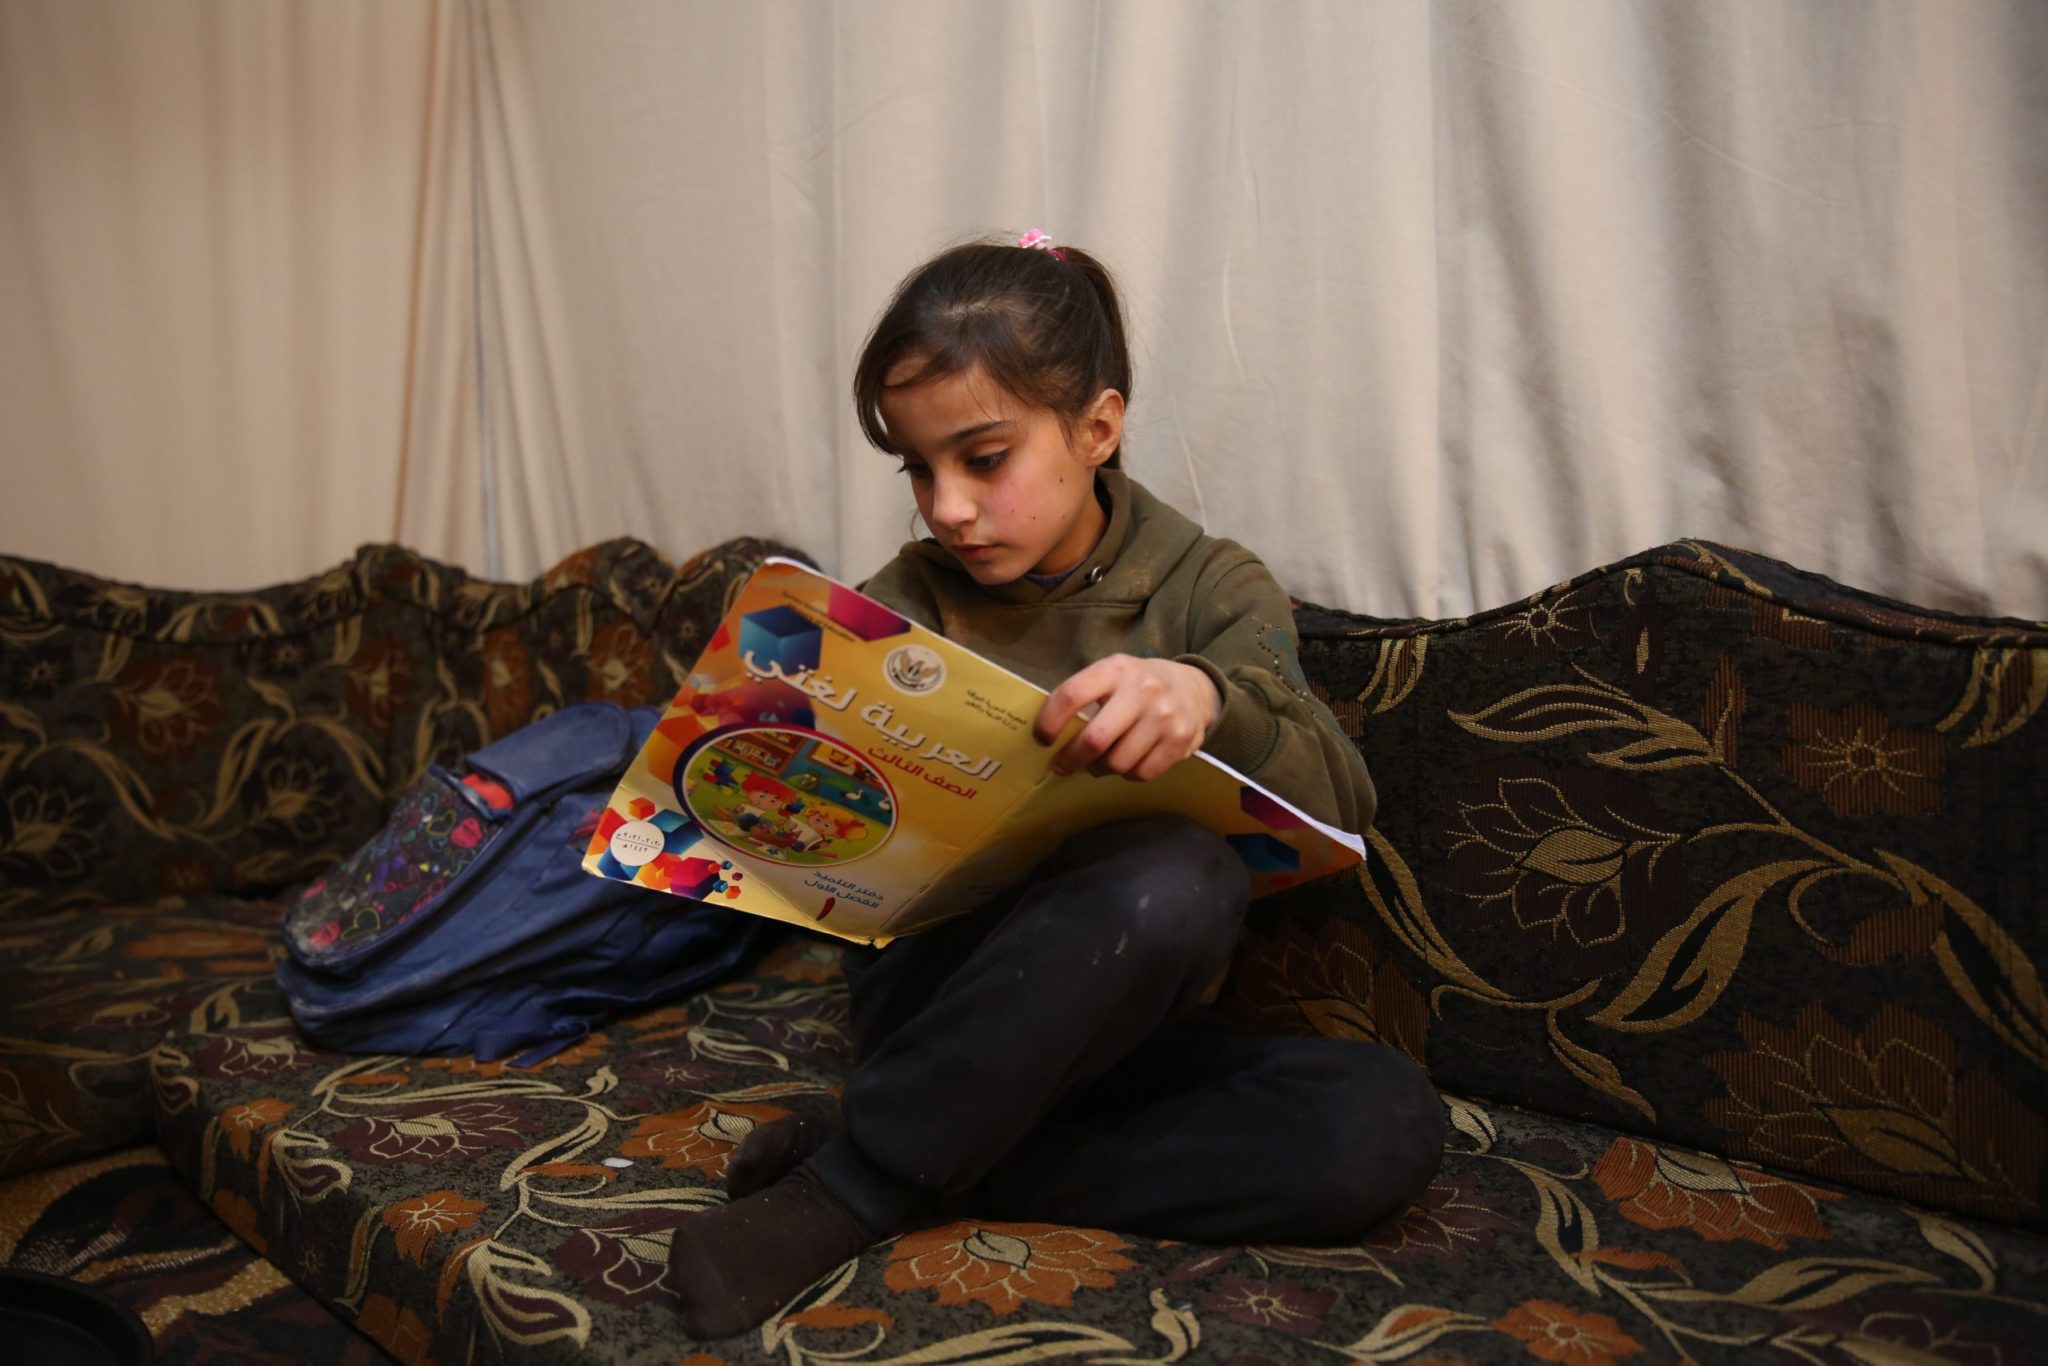 Ruba returns to school in Northwest Syria